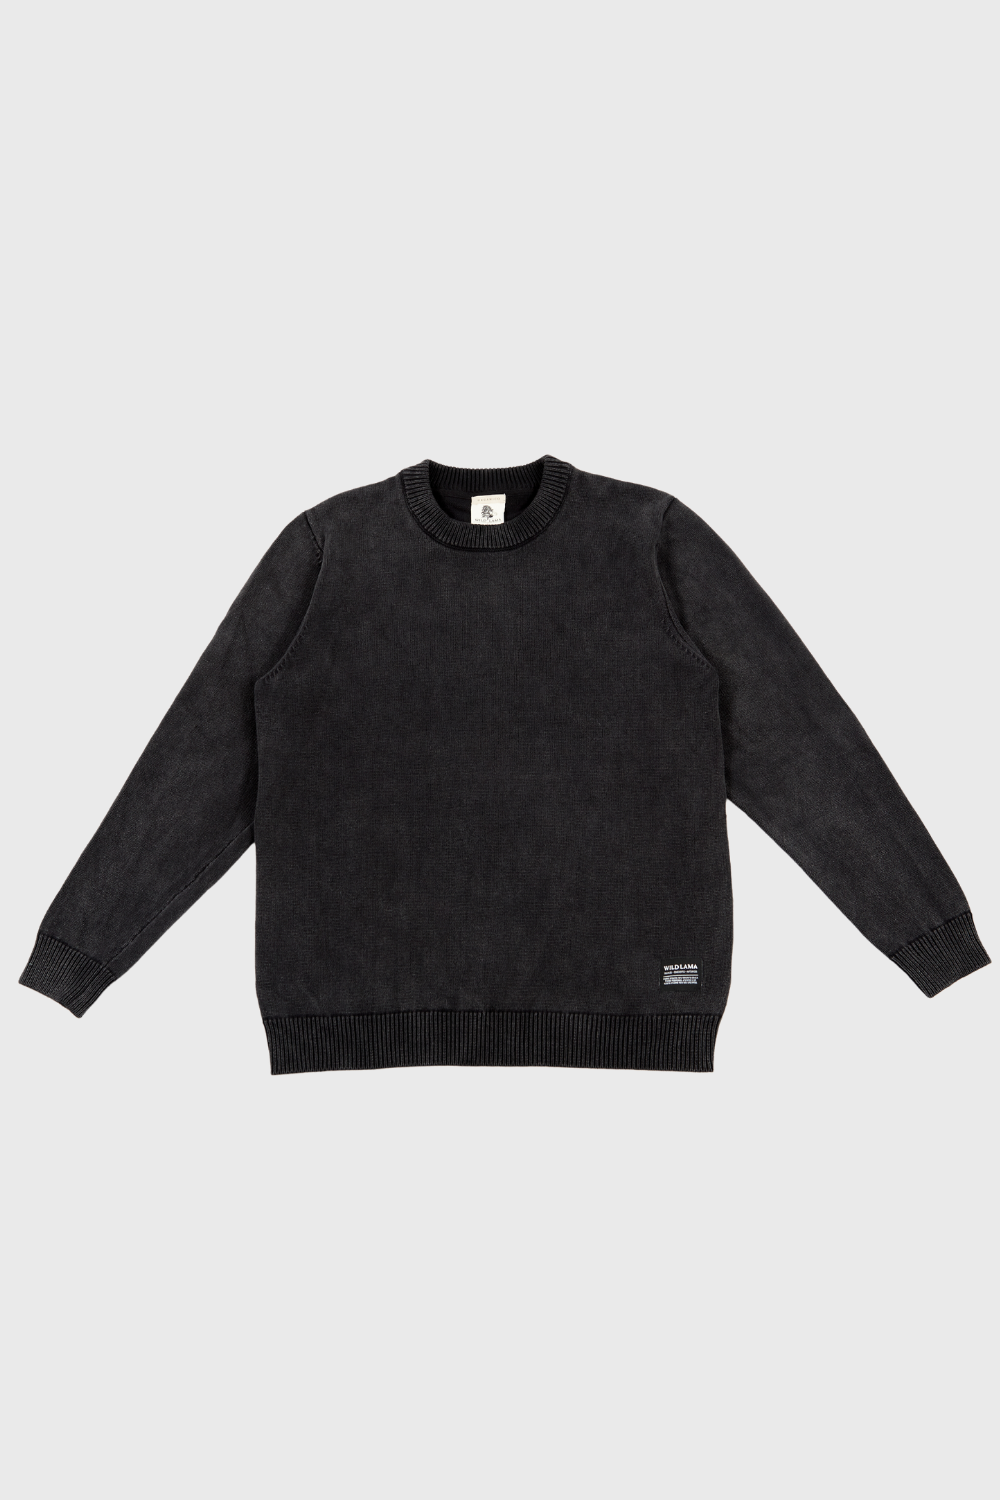 Sweater Tros Orgánico Negro Hombre | Wild Lama